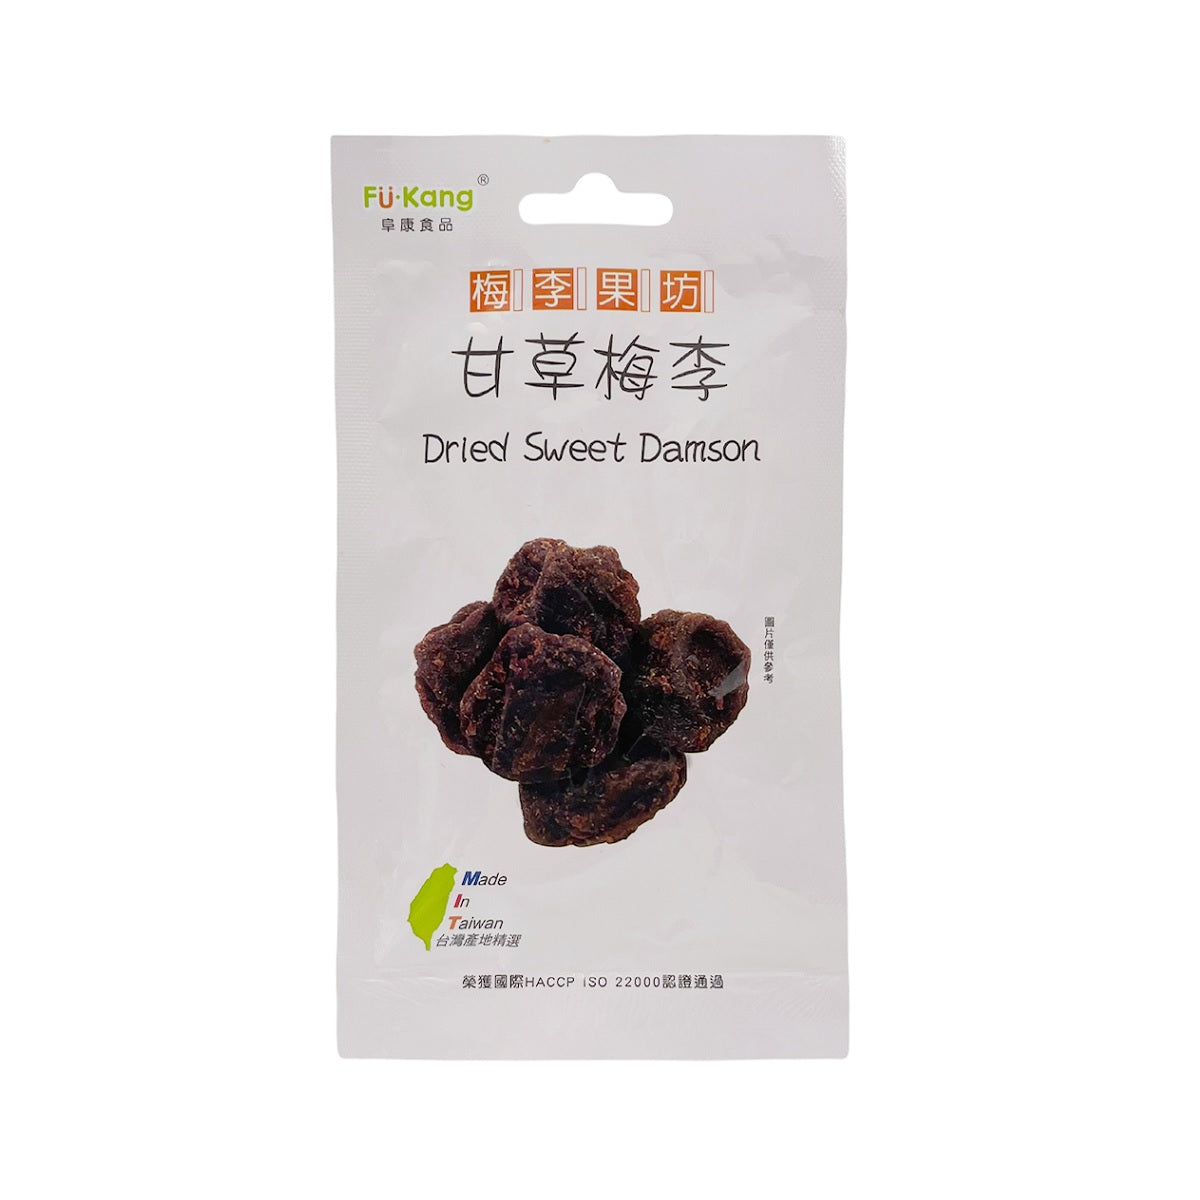 【FUKANG】 Dried Licorice Plum (Dried Sweet Damson) 60g